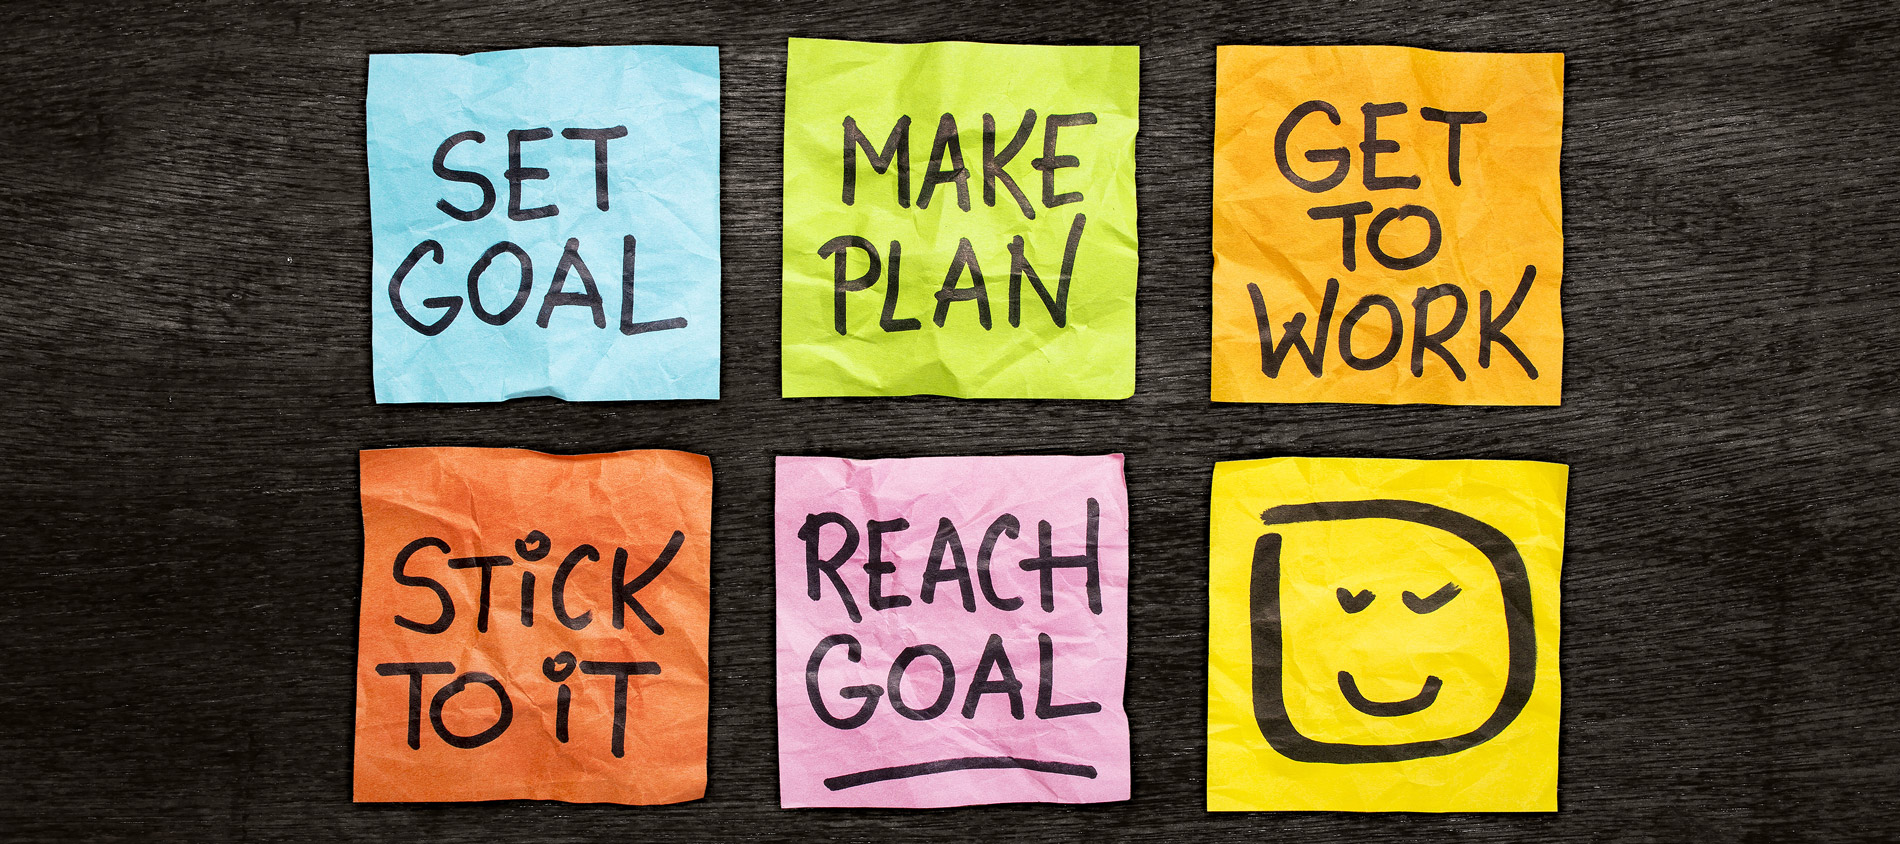 Design Thinking - Set Goal, Make Plan, Get to Work, Stick to it, Reach Goal, HAPPY!